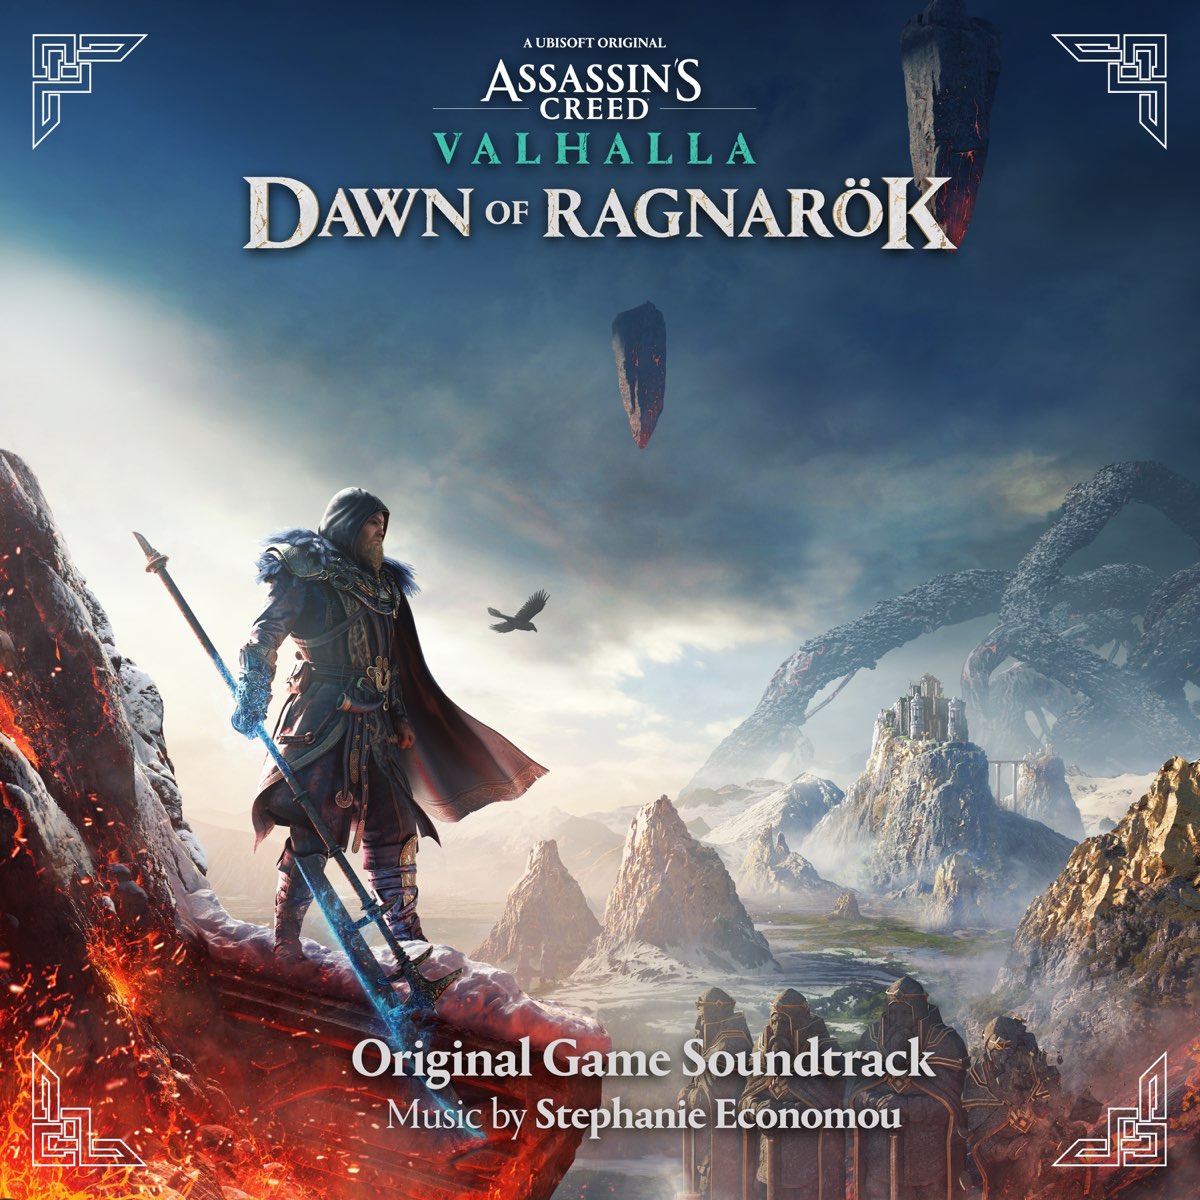 Assassin's Creed Valhalla: Dawn of Ragnarök (Original Game Soundtrack) by  Stephanie Economou on Apple Music